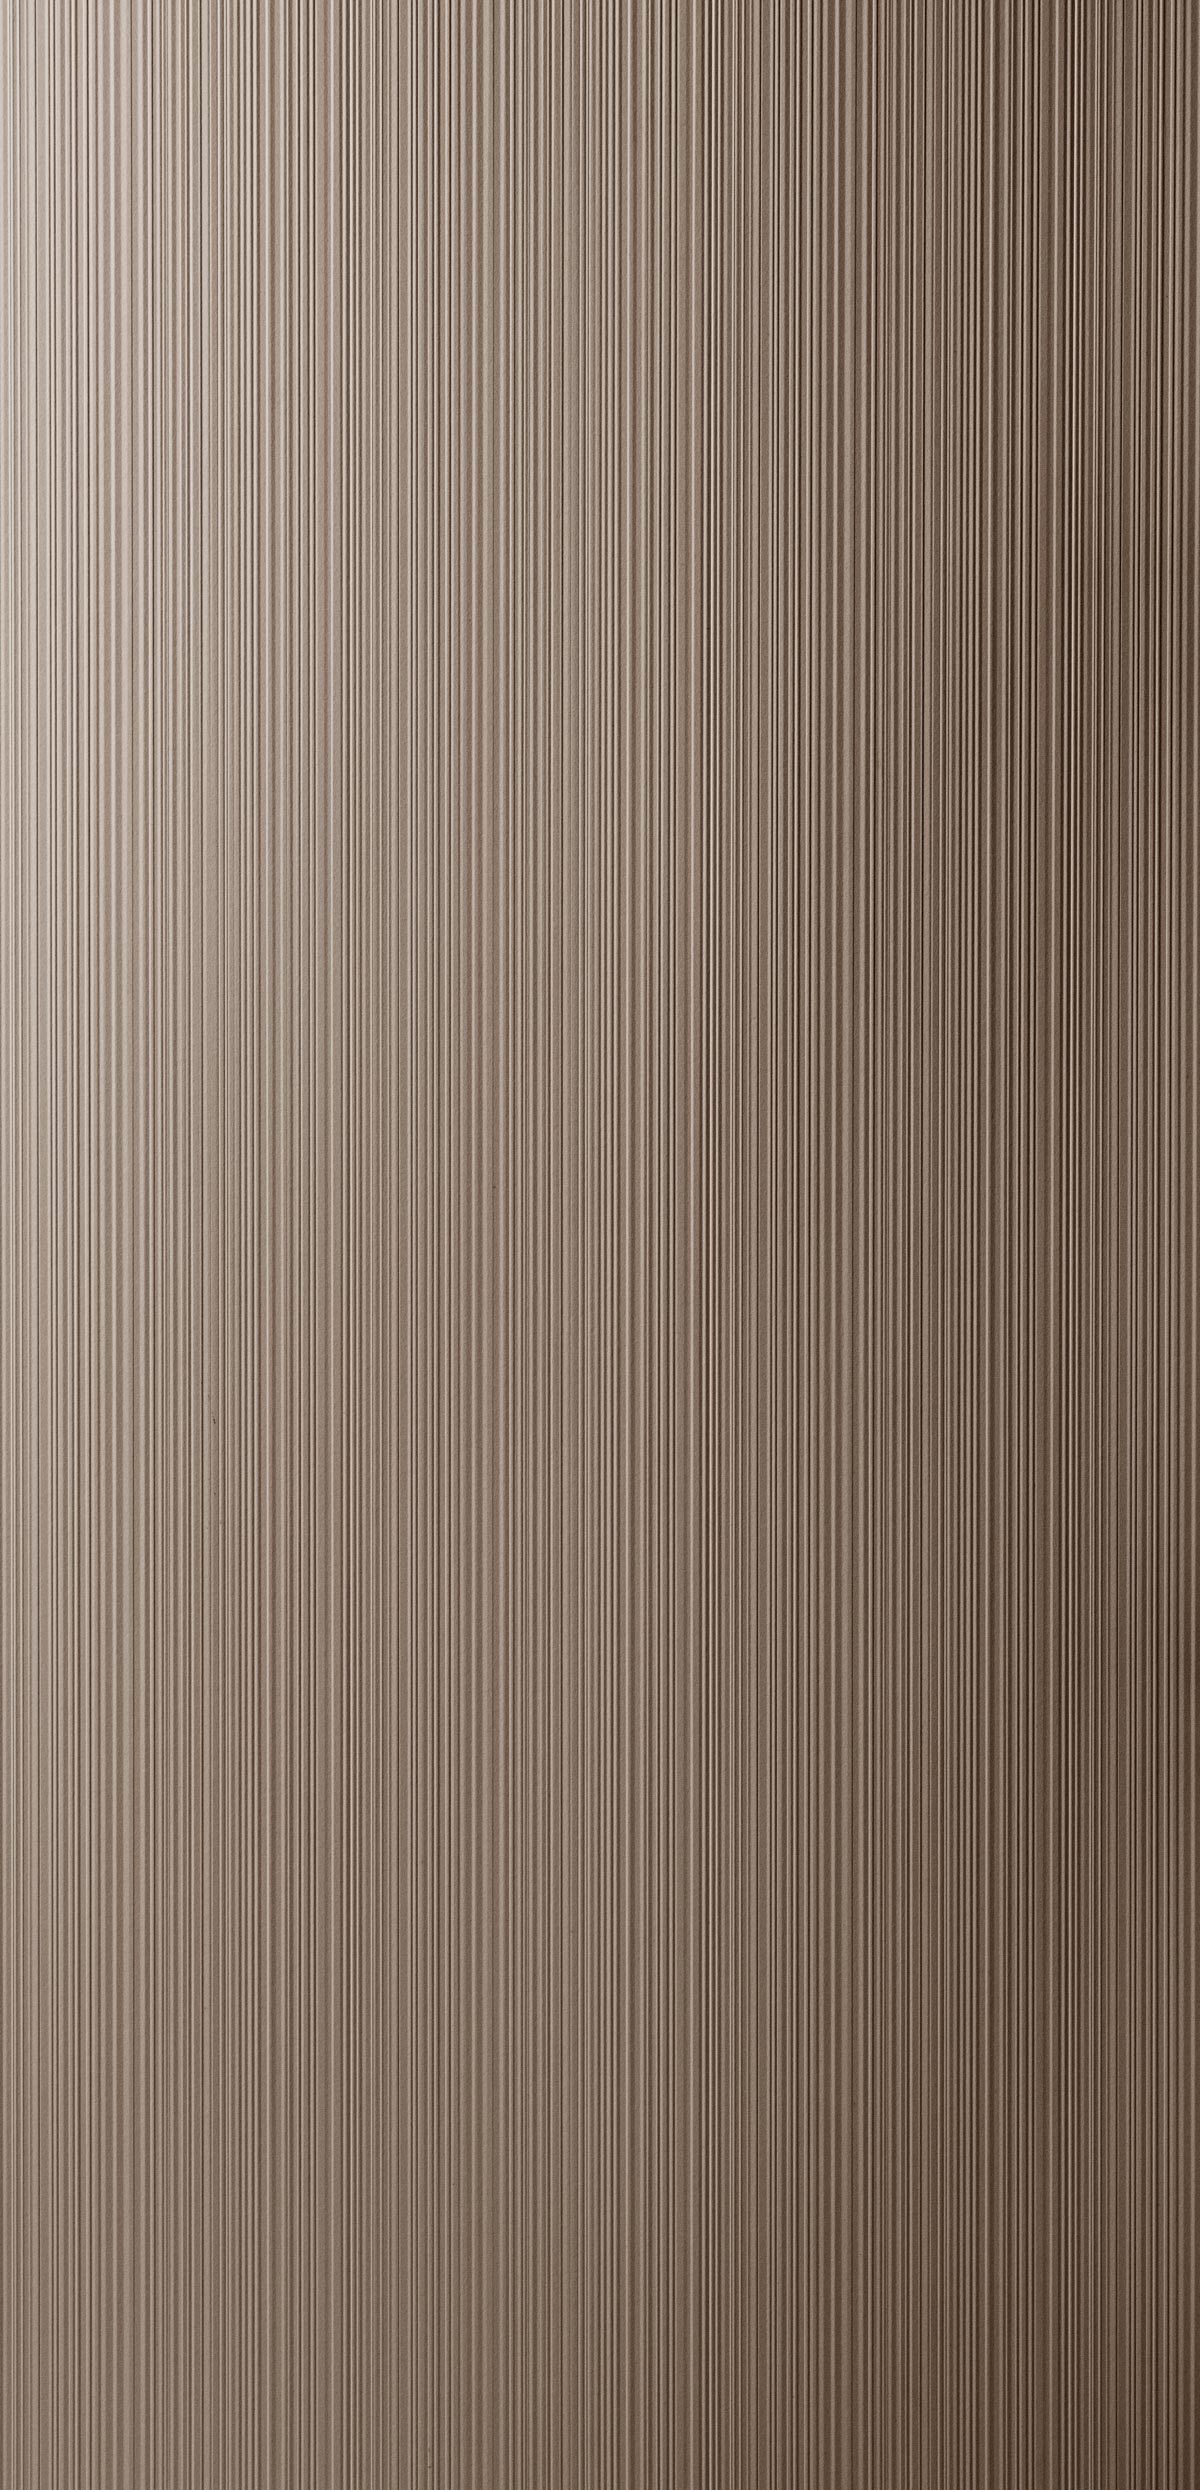 Lines Chestnut 006-panel